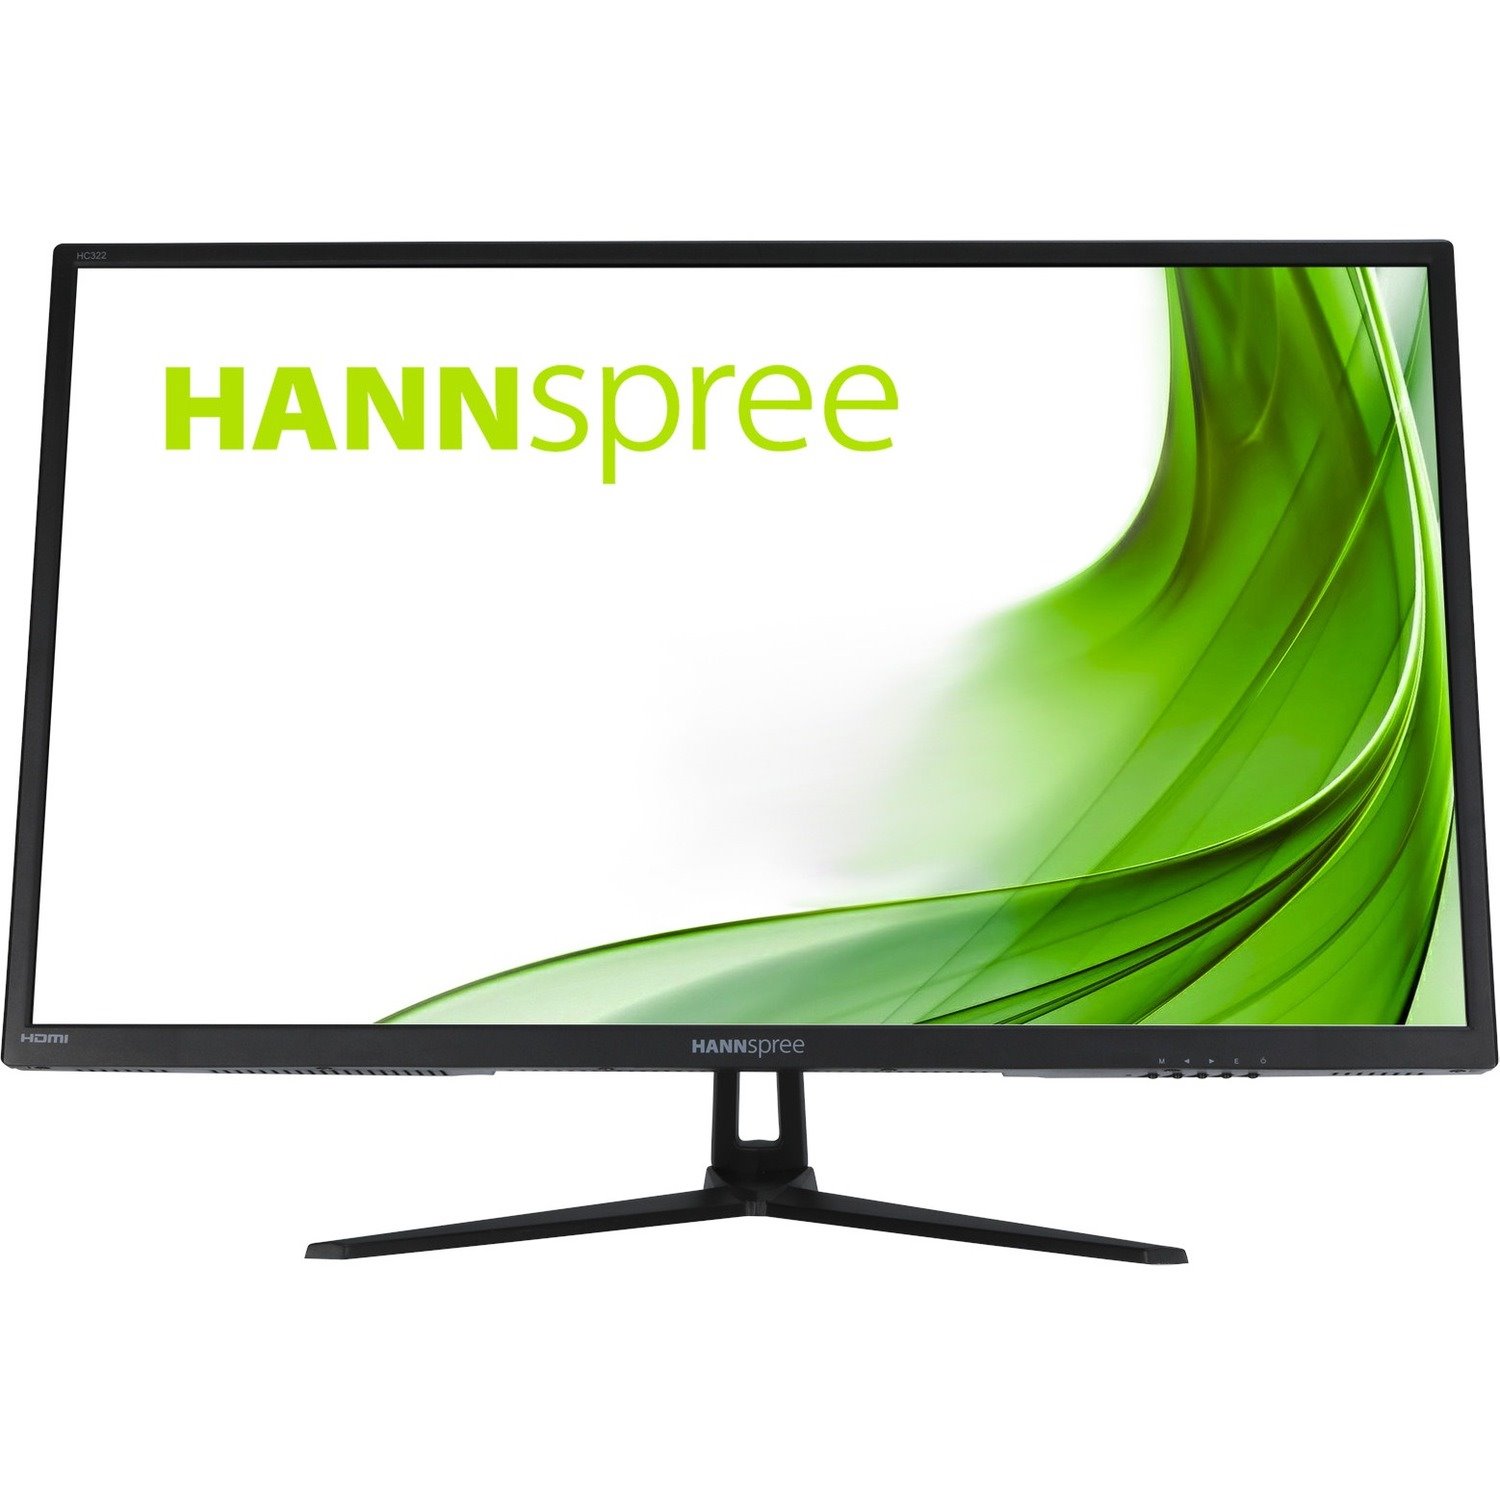 Hannspree HC322PPB 81.3 cm (32") WQHD LED LCD Monitor - 16:9 - Matte Black